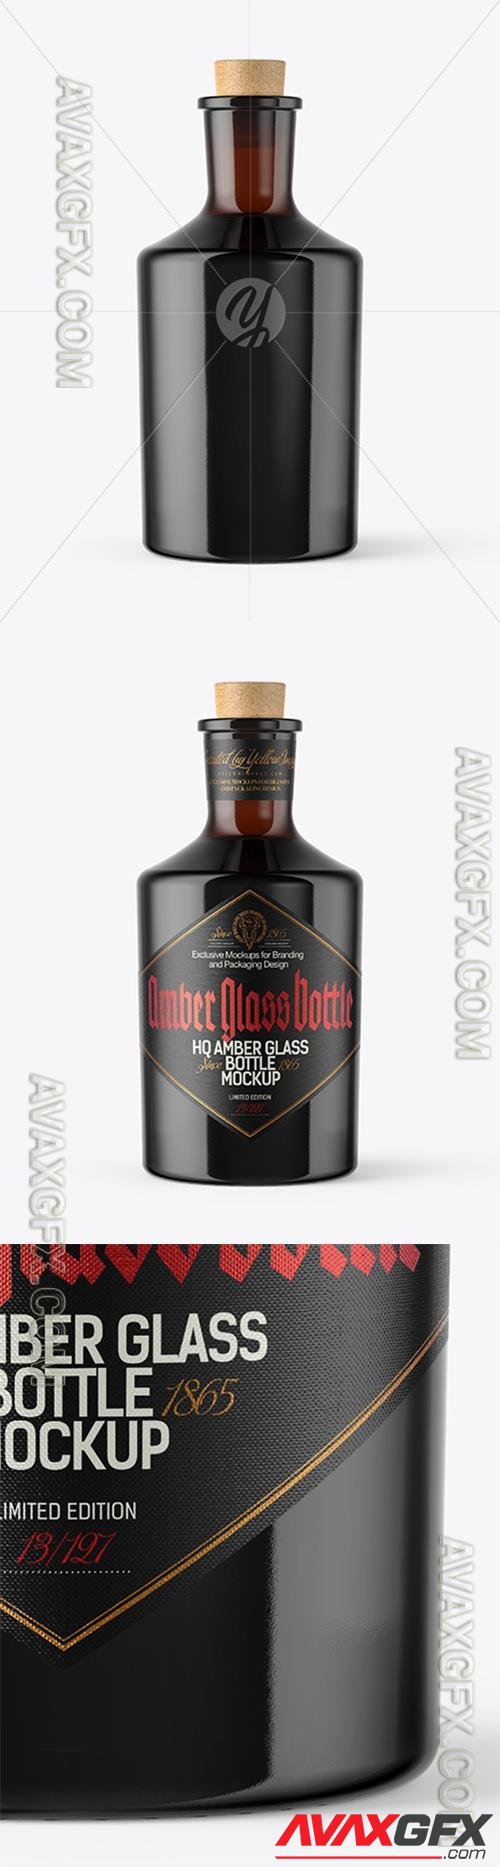 Amber Glass Bottle with Cork Mockup 47977 TIF